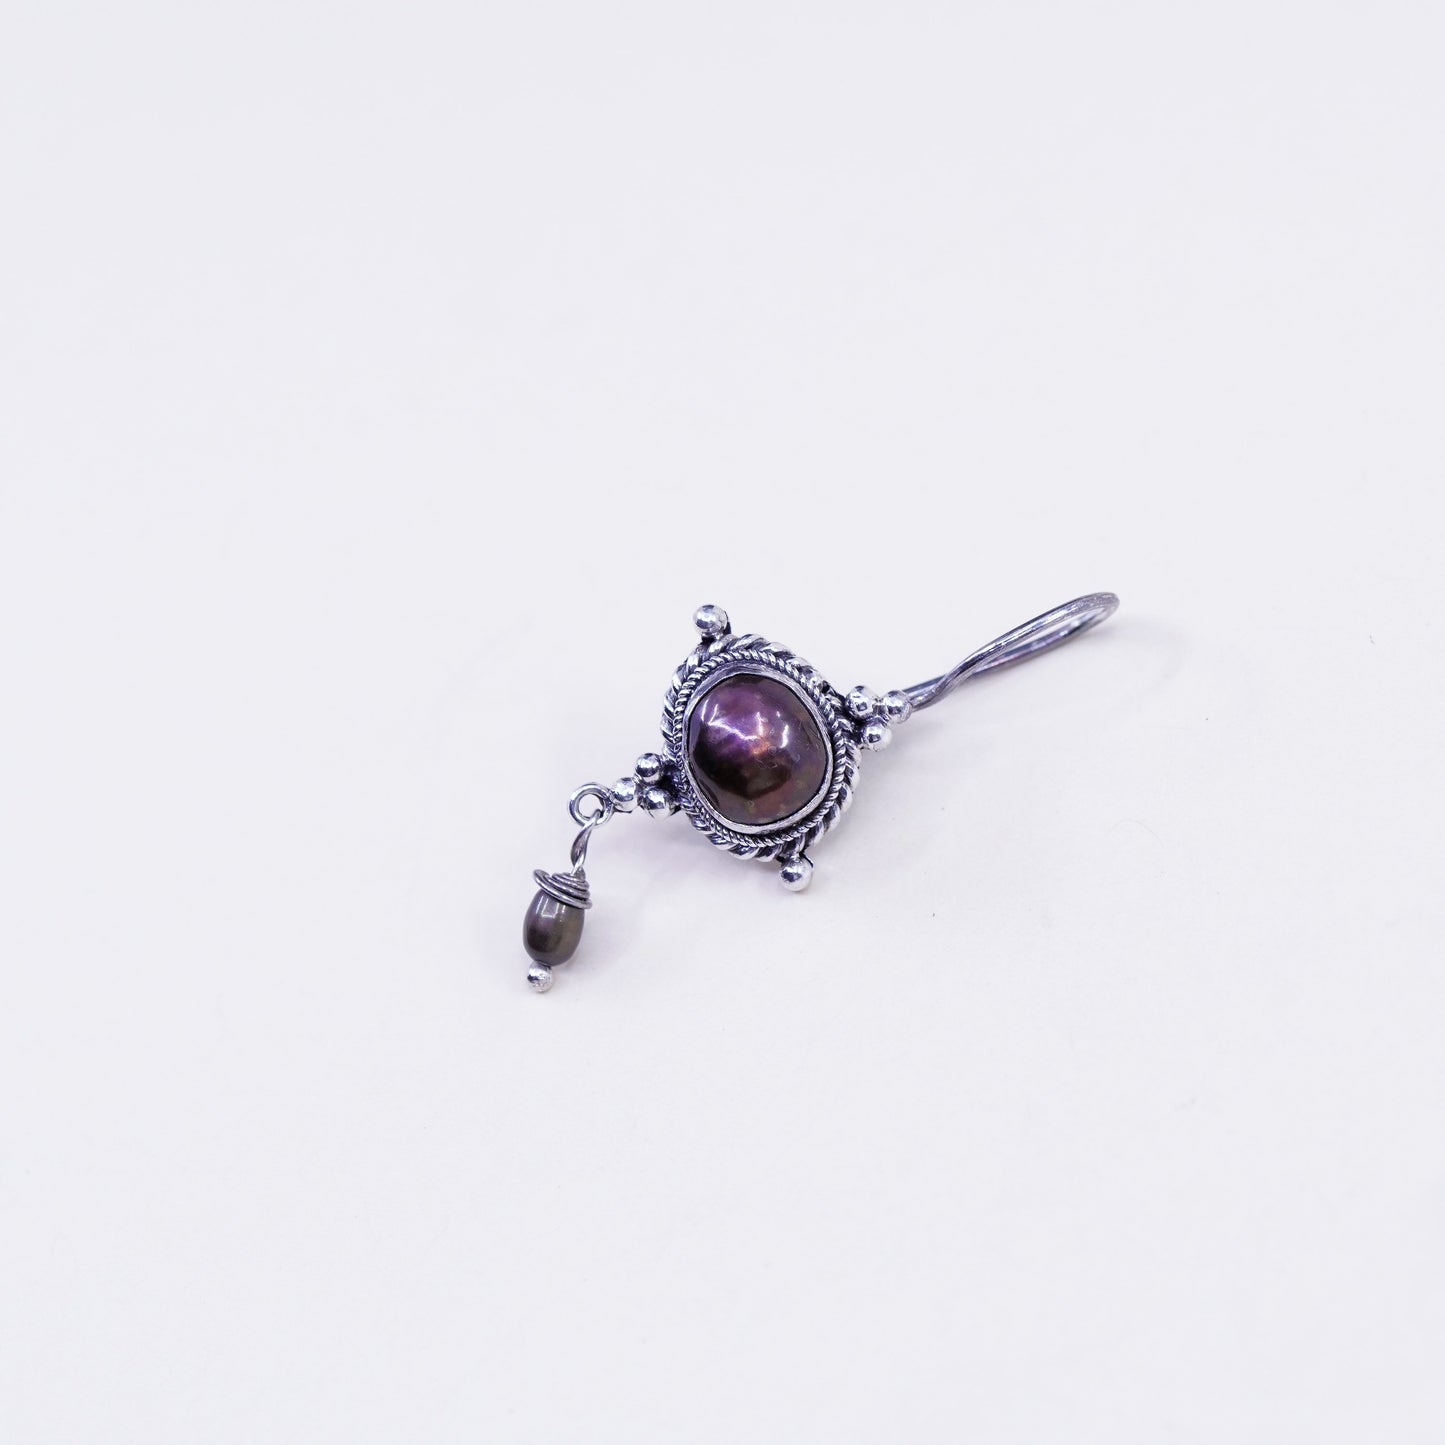 Vintage Sterling 925 silver handmade earrings with copper pearl drop